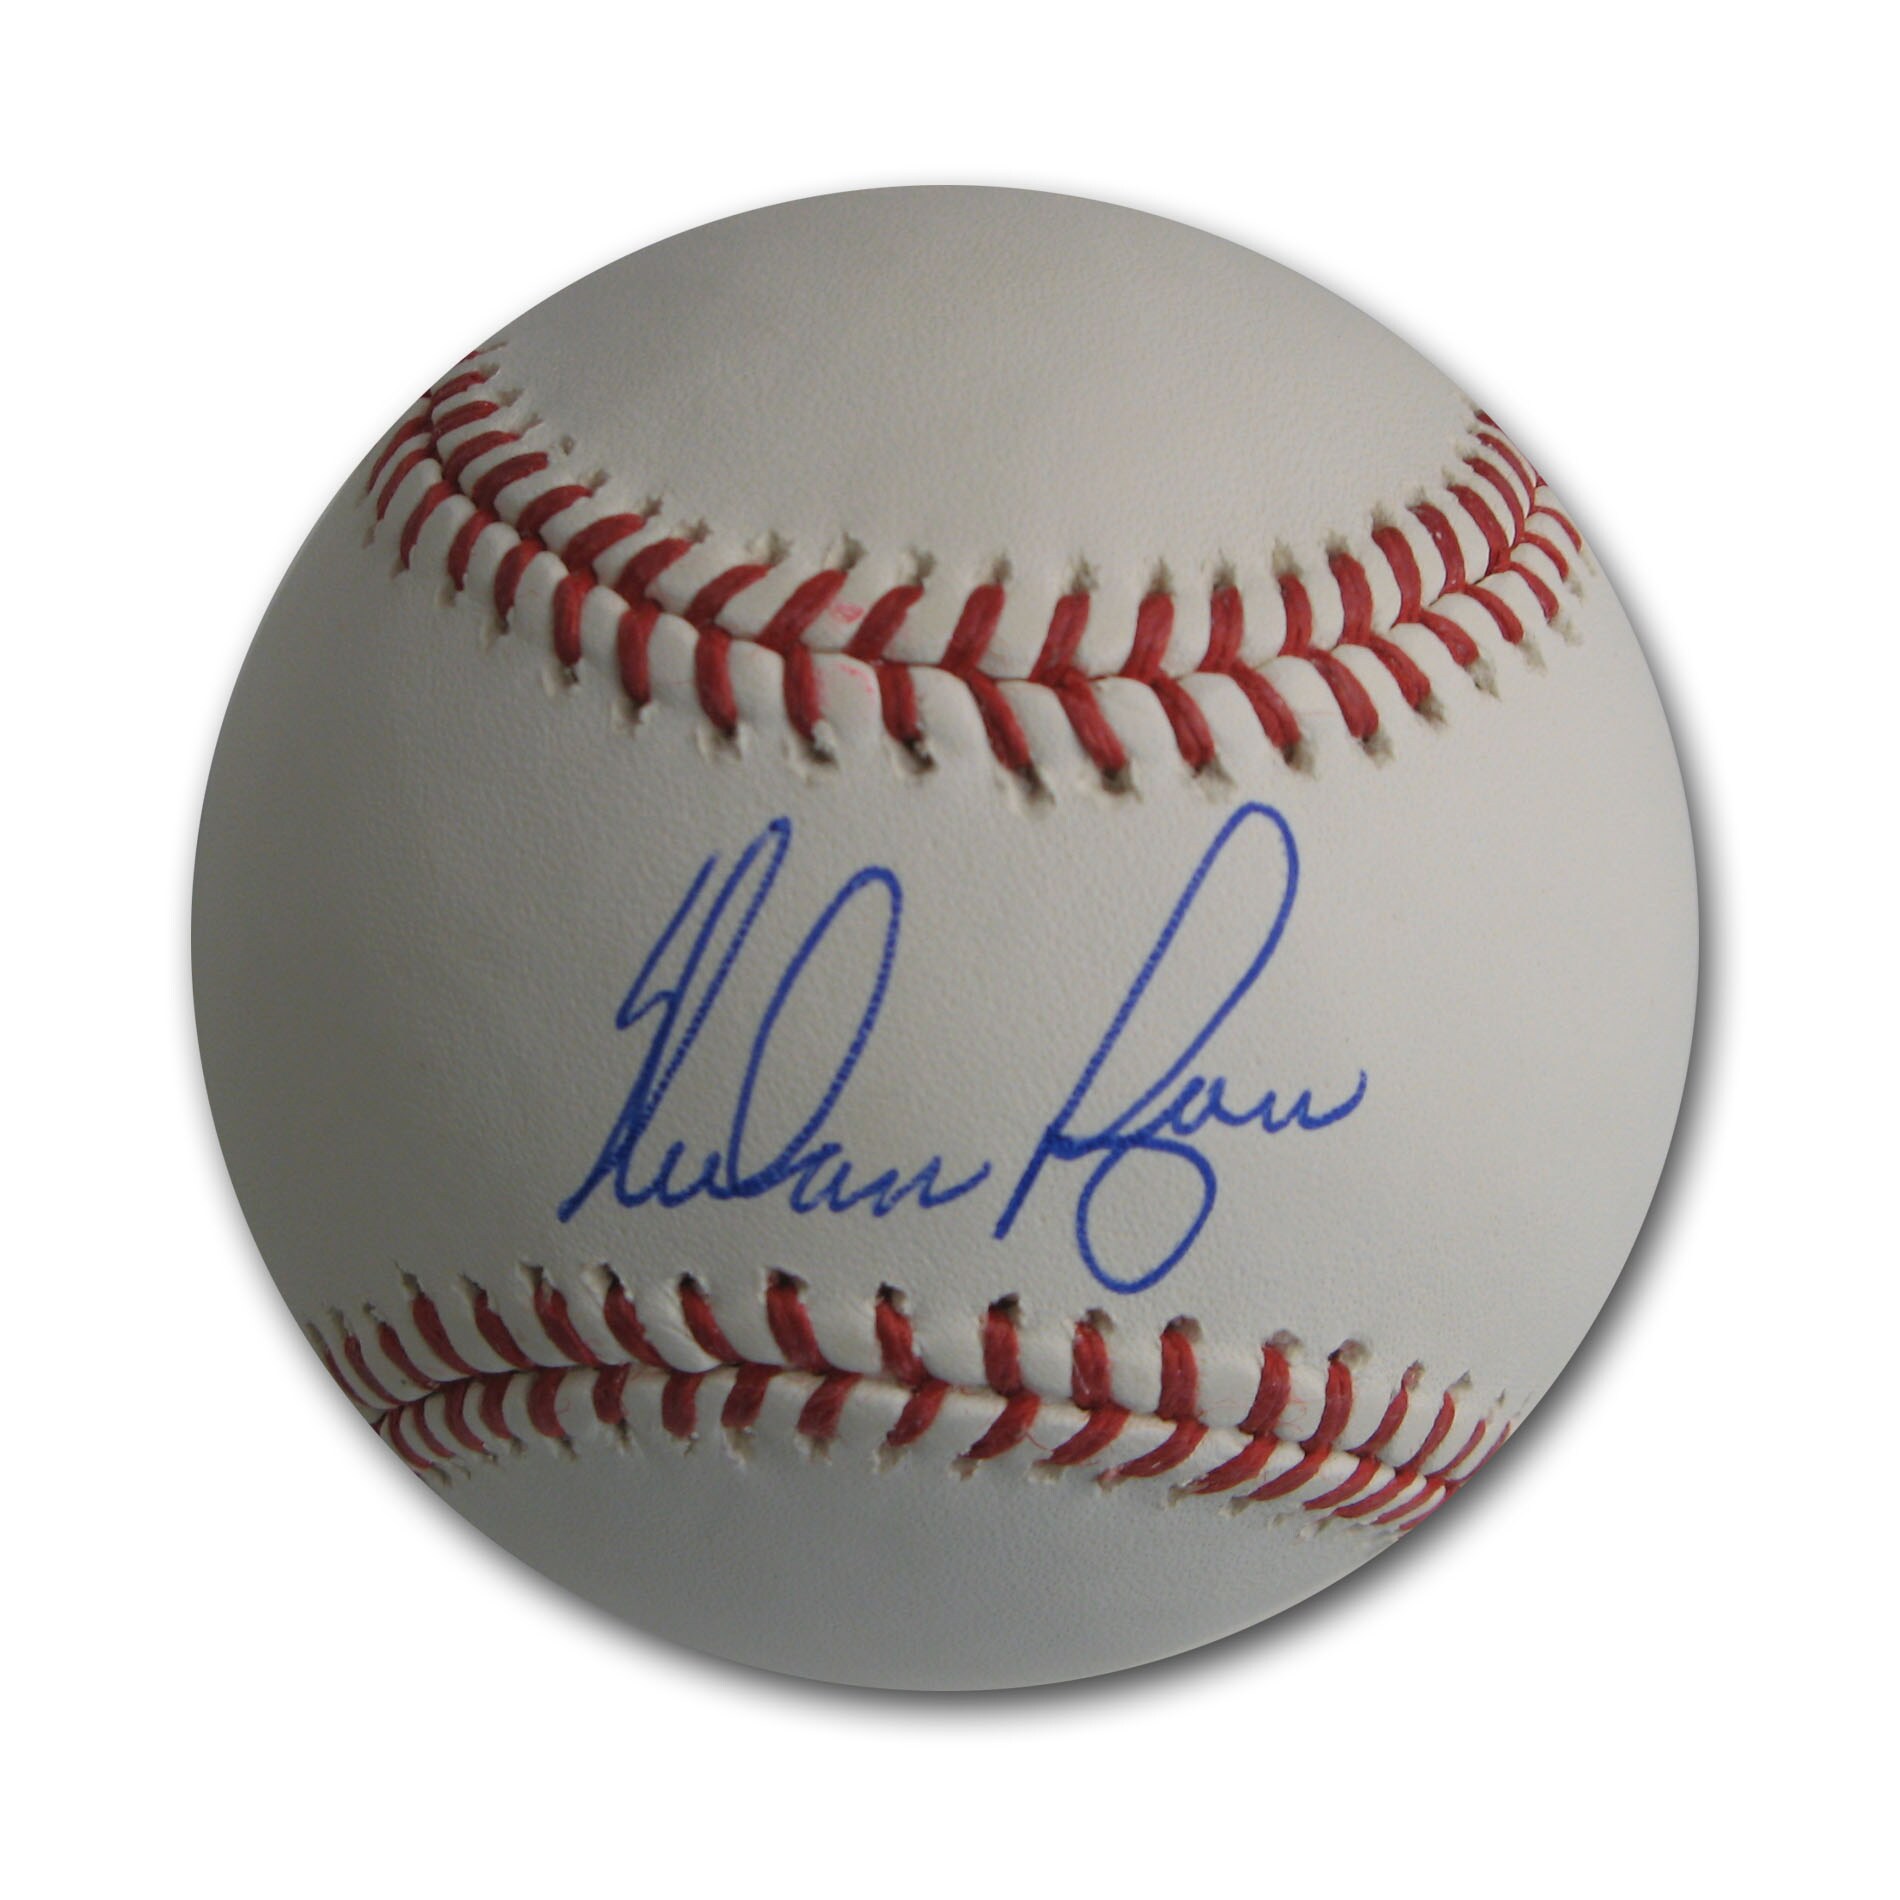 Nolan Ryan Autographed Major League Baseball